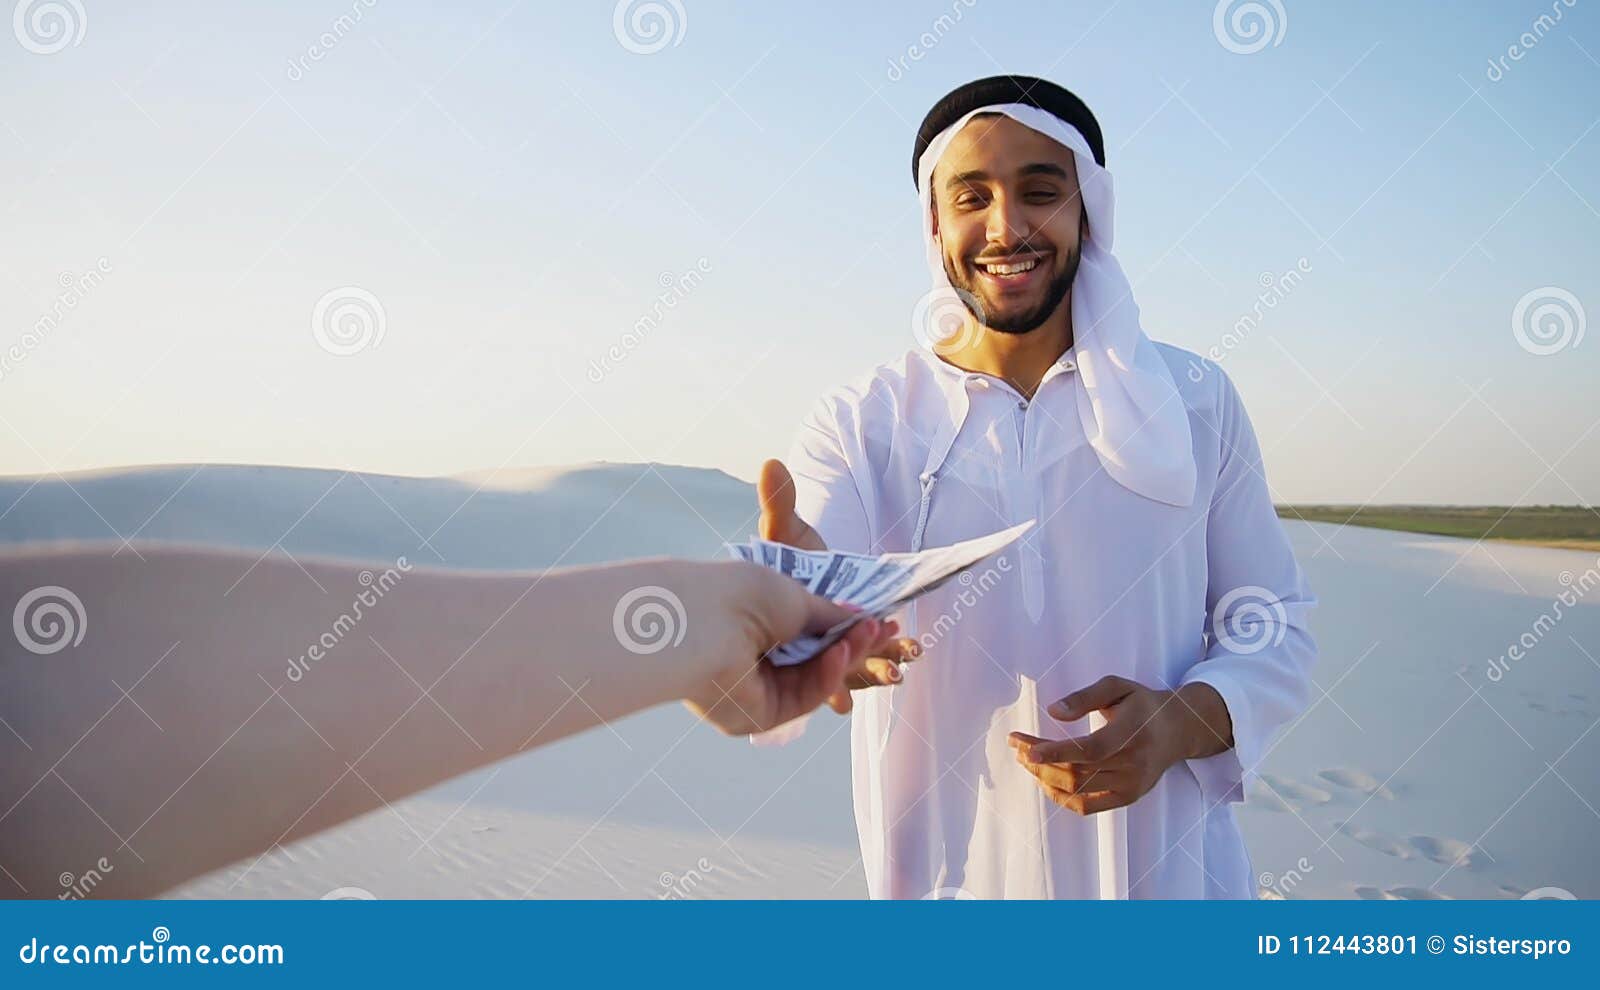 arab male sales representative looks at camera and tells informa